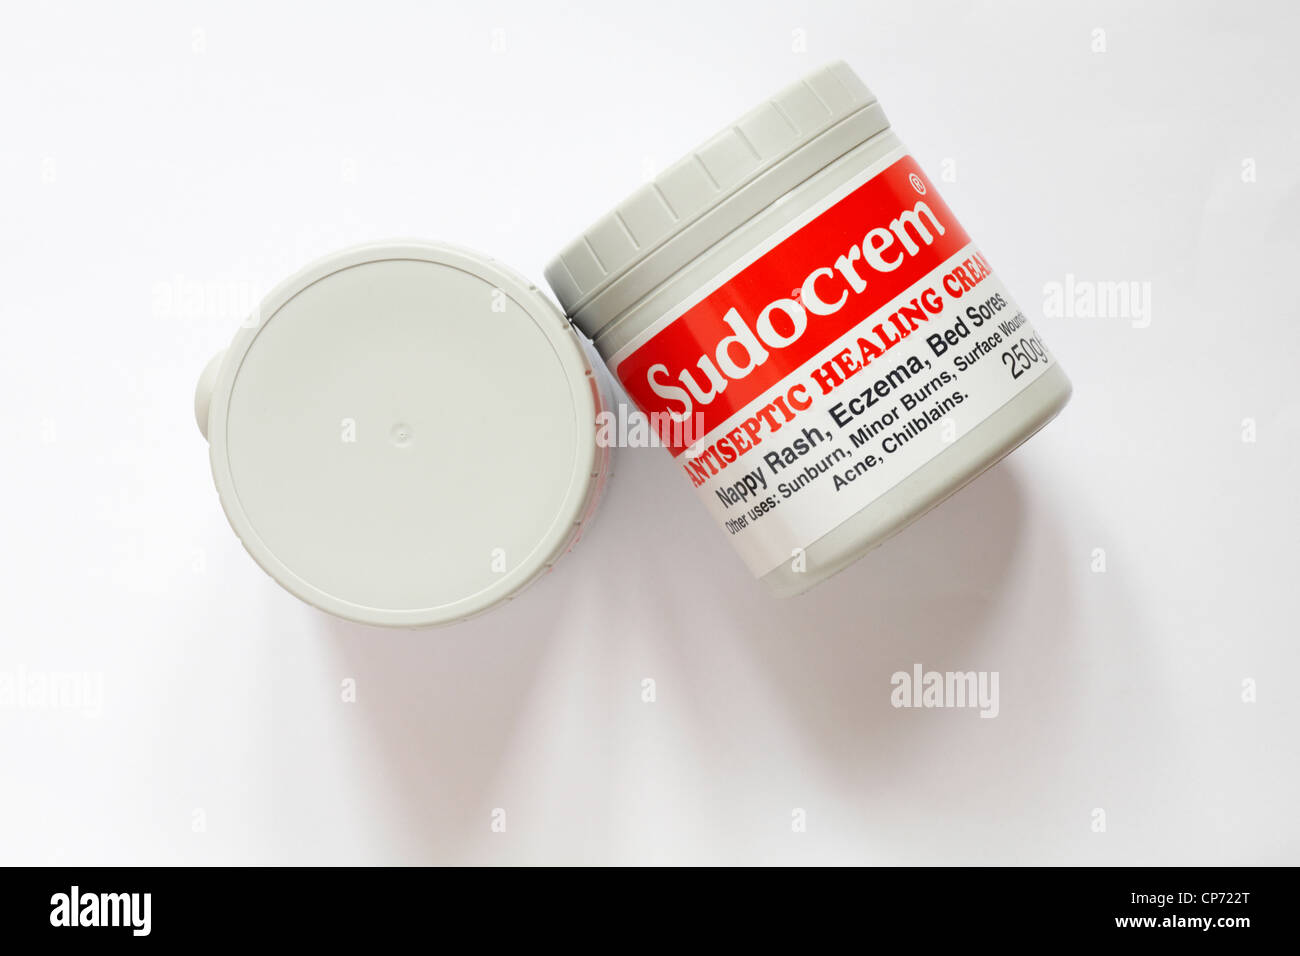 two tubs of Sudocrem antiseptic healing cream isolated on white background Stock Photo